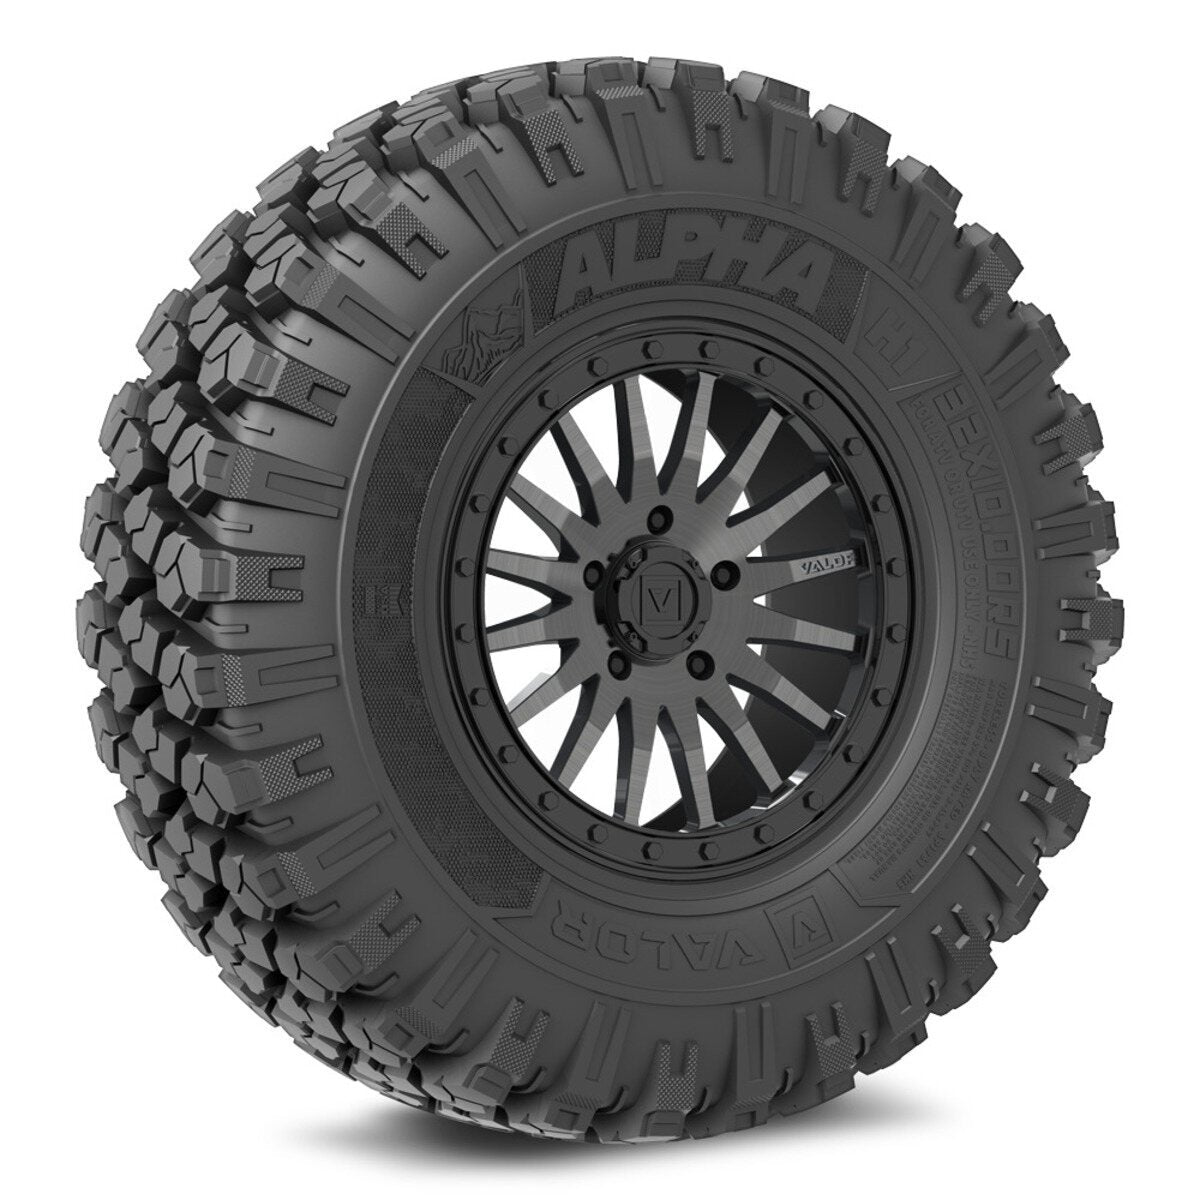 Valor Off-Road Alpha on V06 BG Wheel and Tire Kits